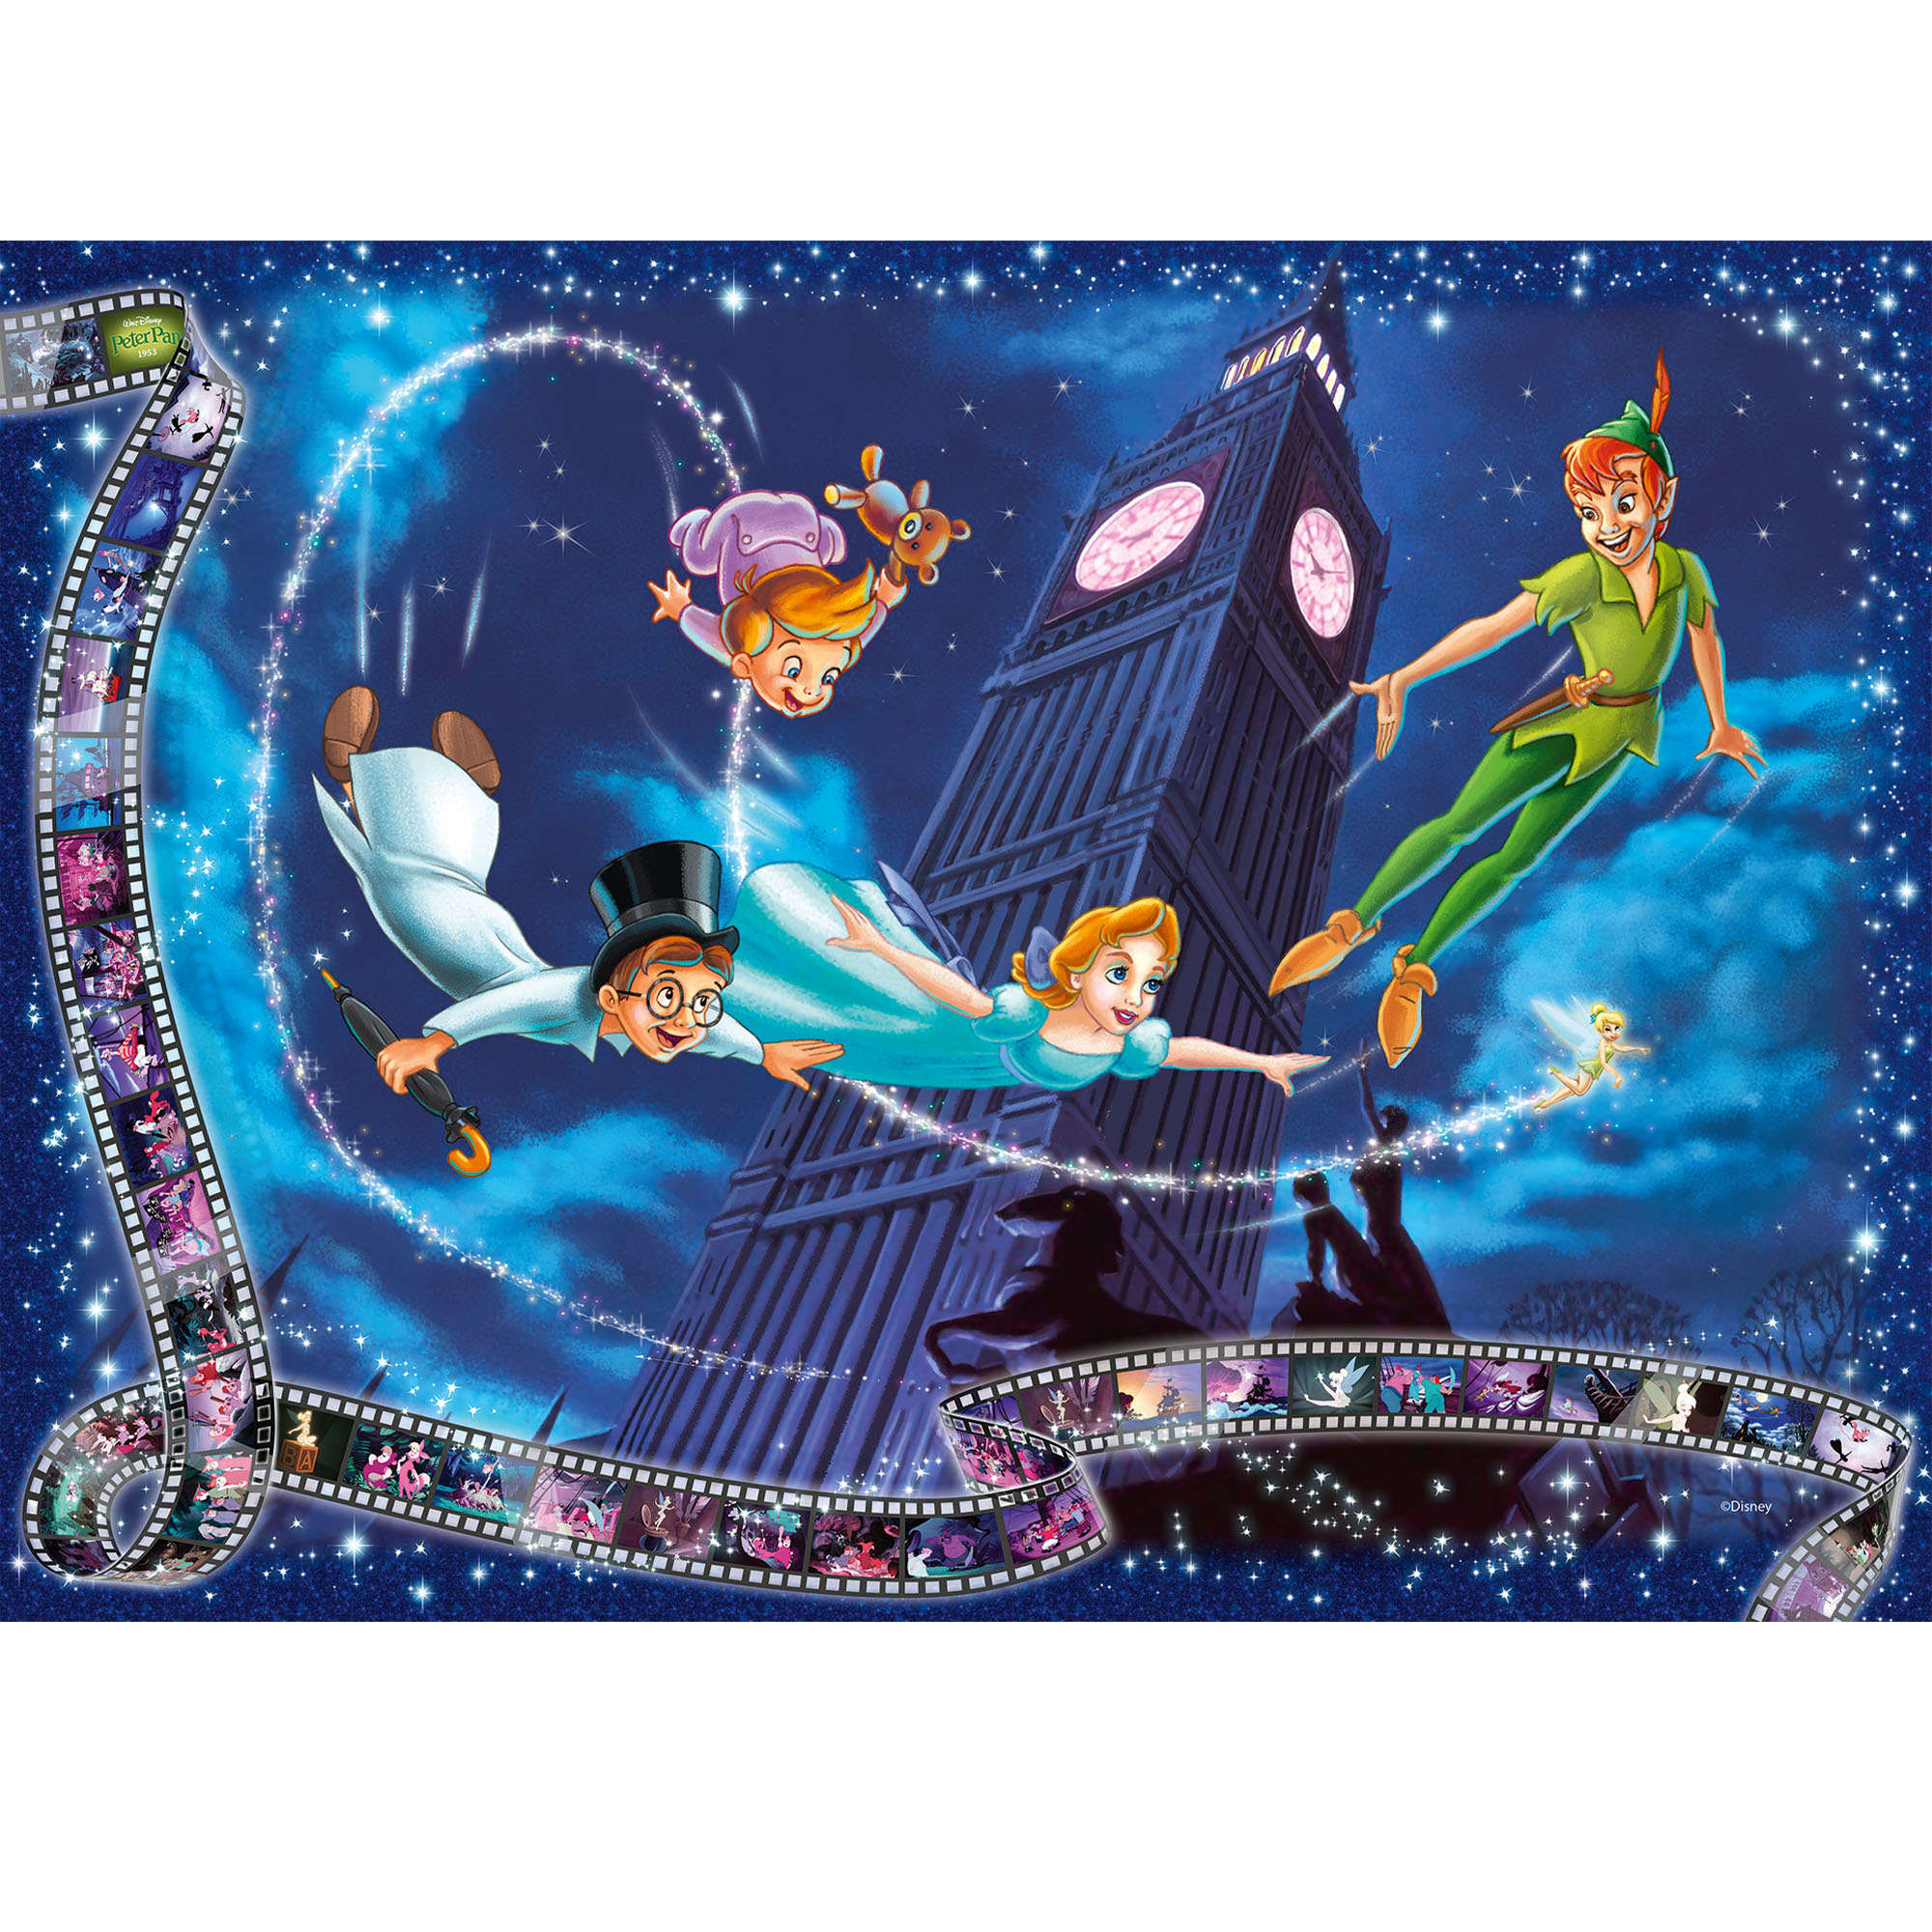 Ravensburger Puzzle 1000 pezzi 19743 - Disney Classic Peter Pan, , large